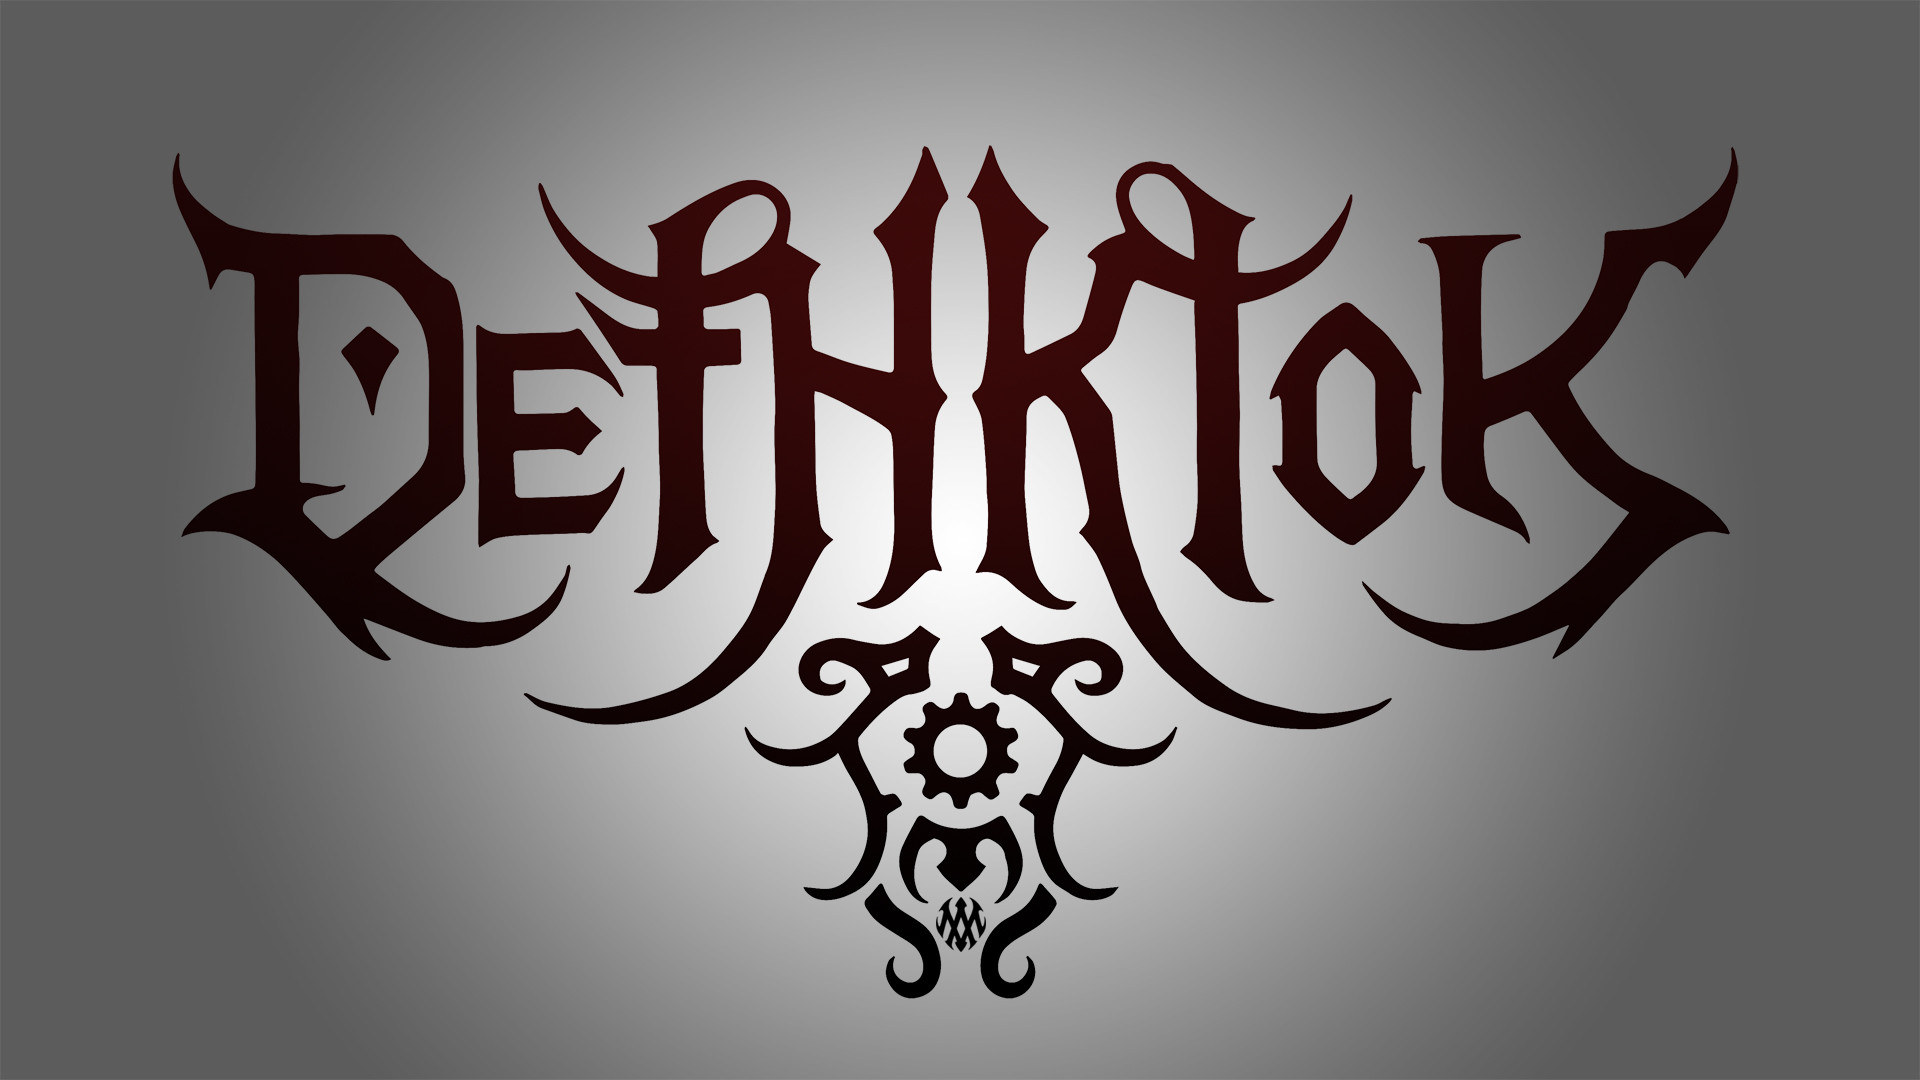 1920x1080 ... Dethklok by Splatkin on DeviantArt Metalocalypse Logo Wallpaper ...